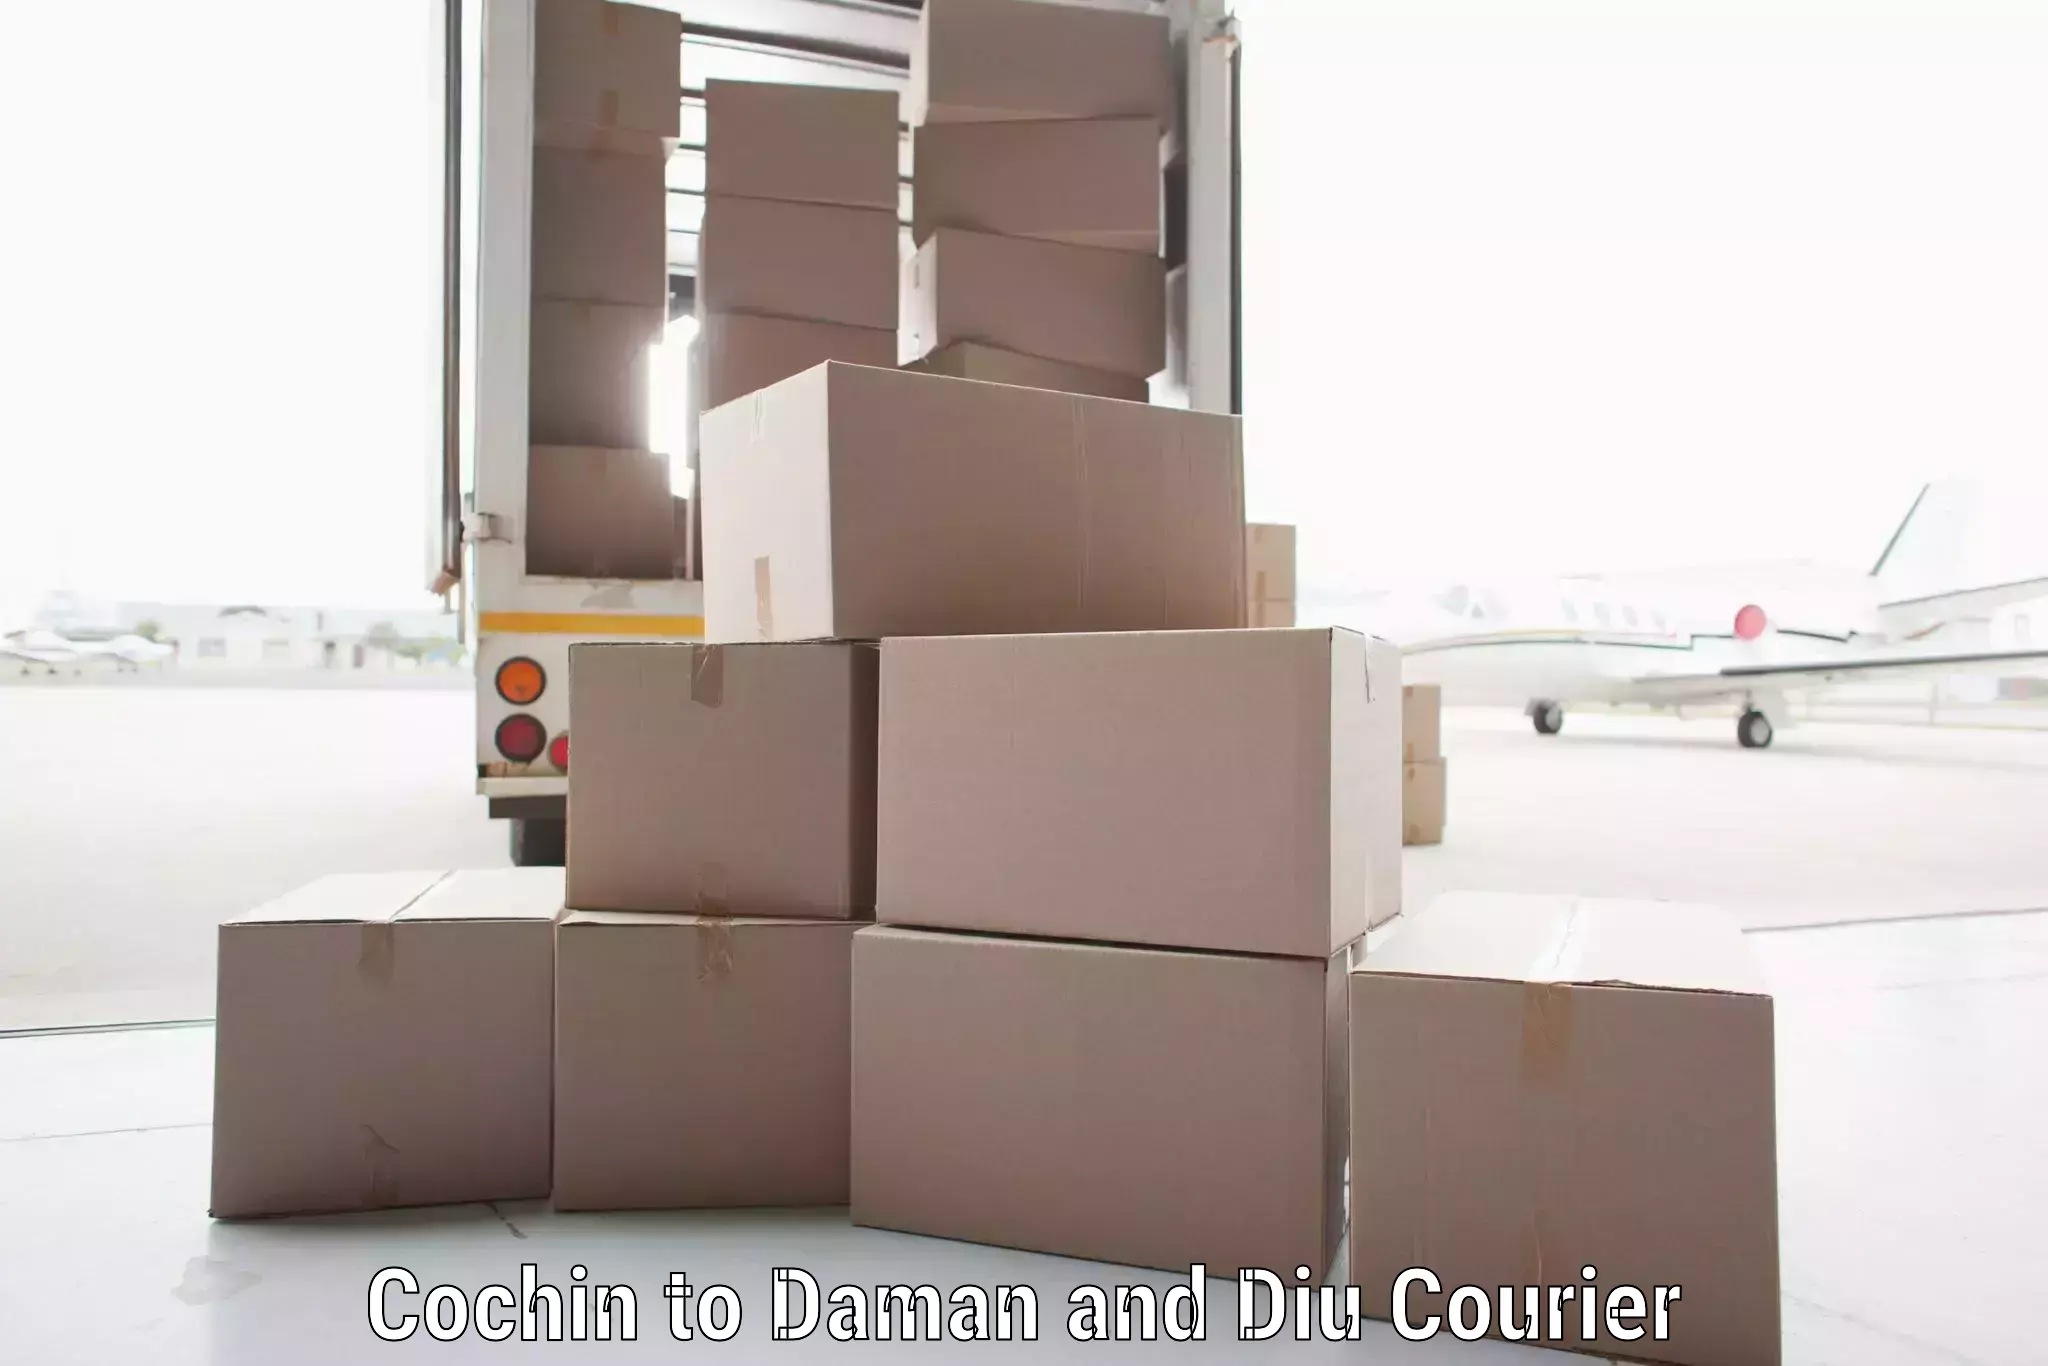 Global logistics network Cochin to Daman